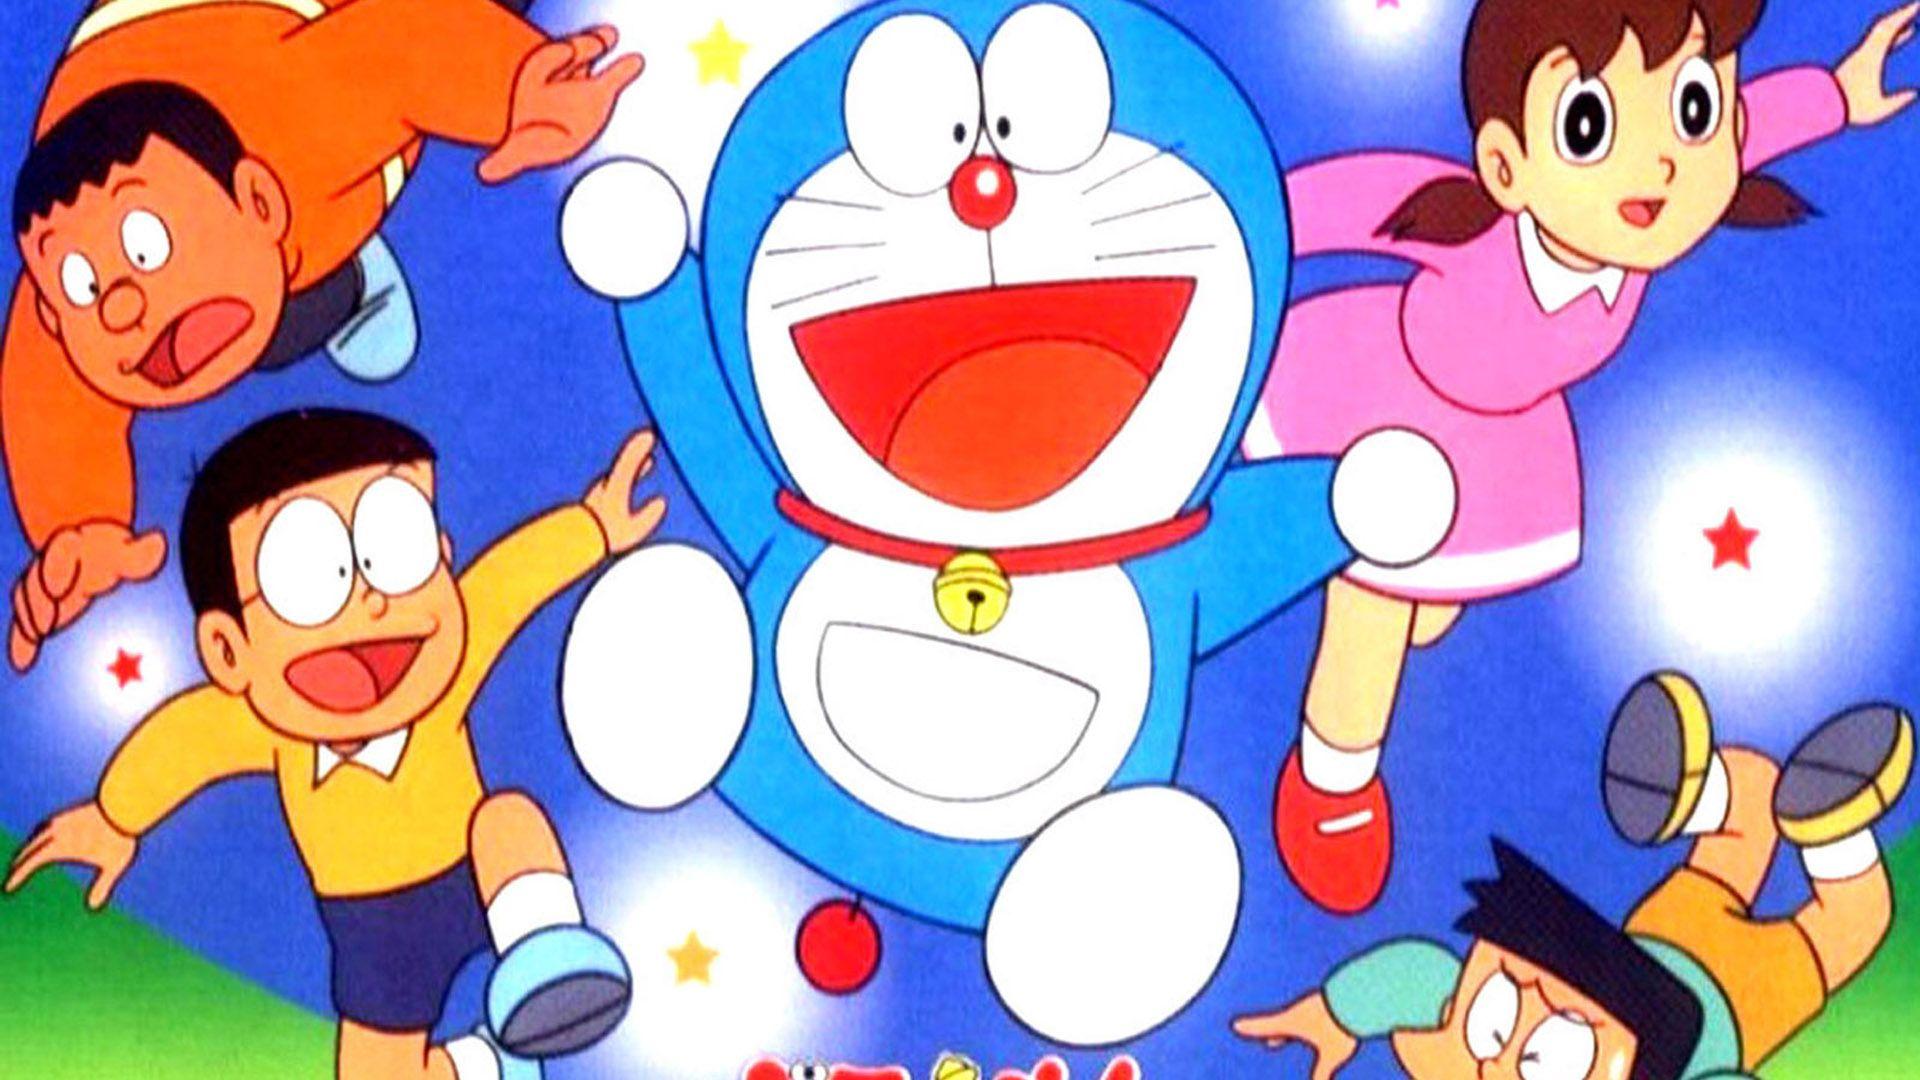 Doraemon HD Wallpapers - Wallpaper Cave